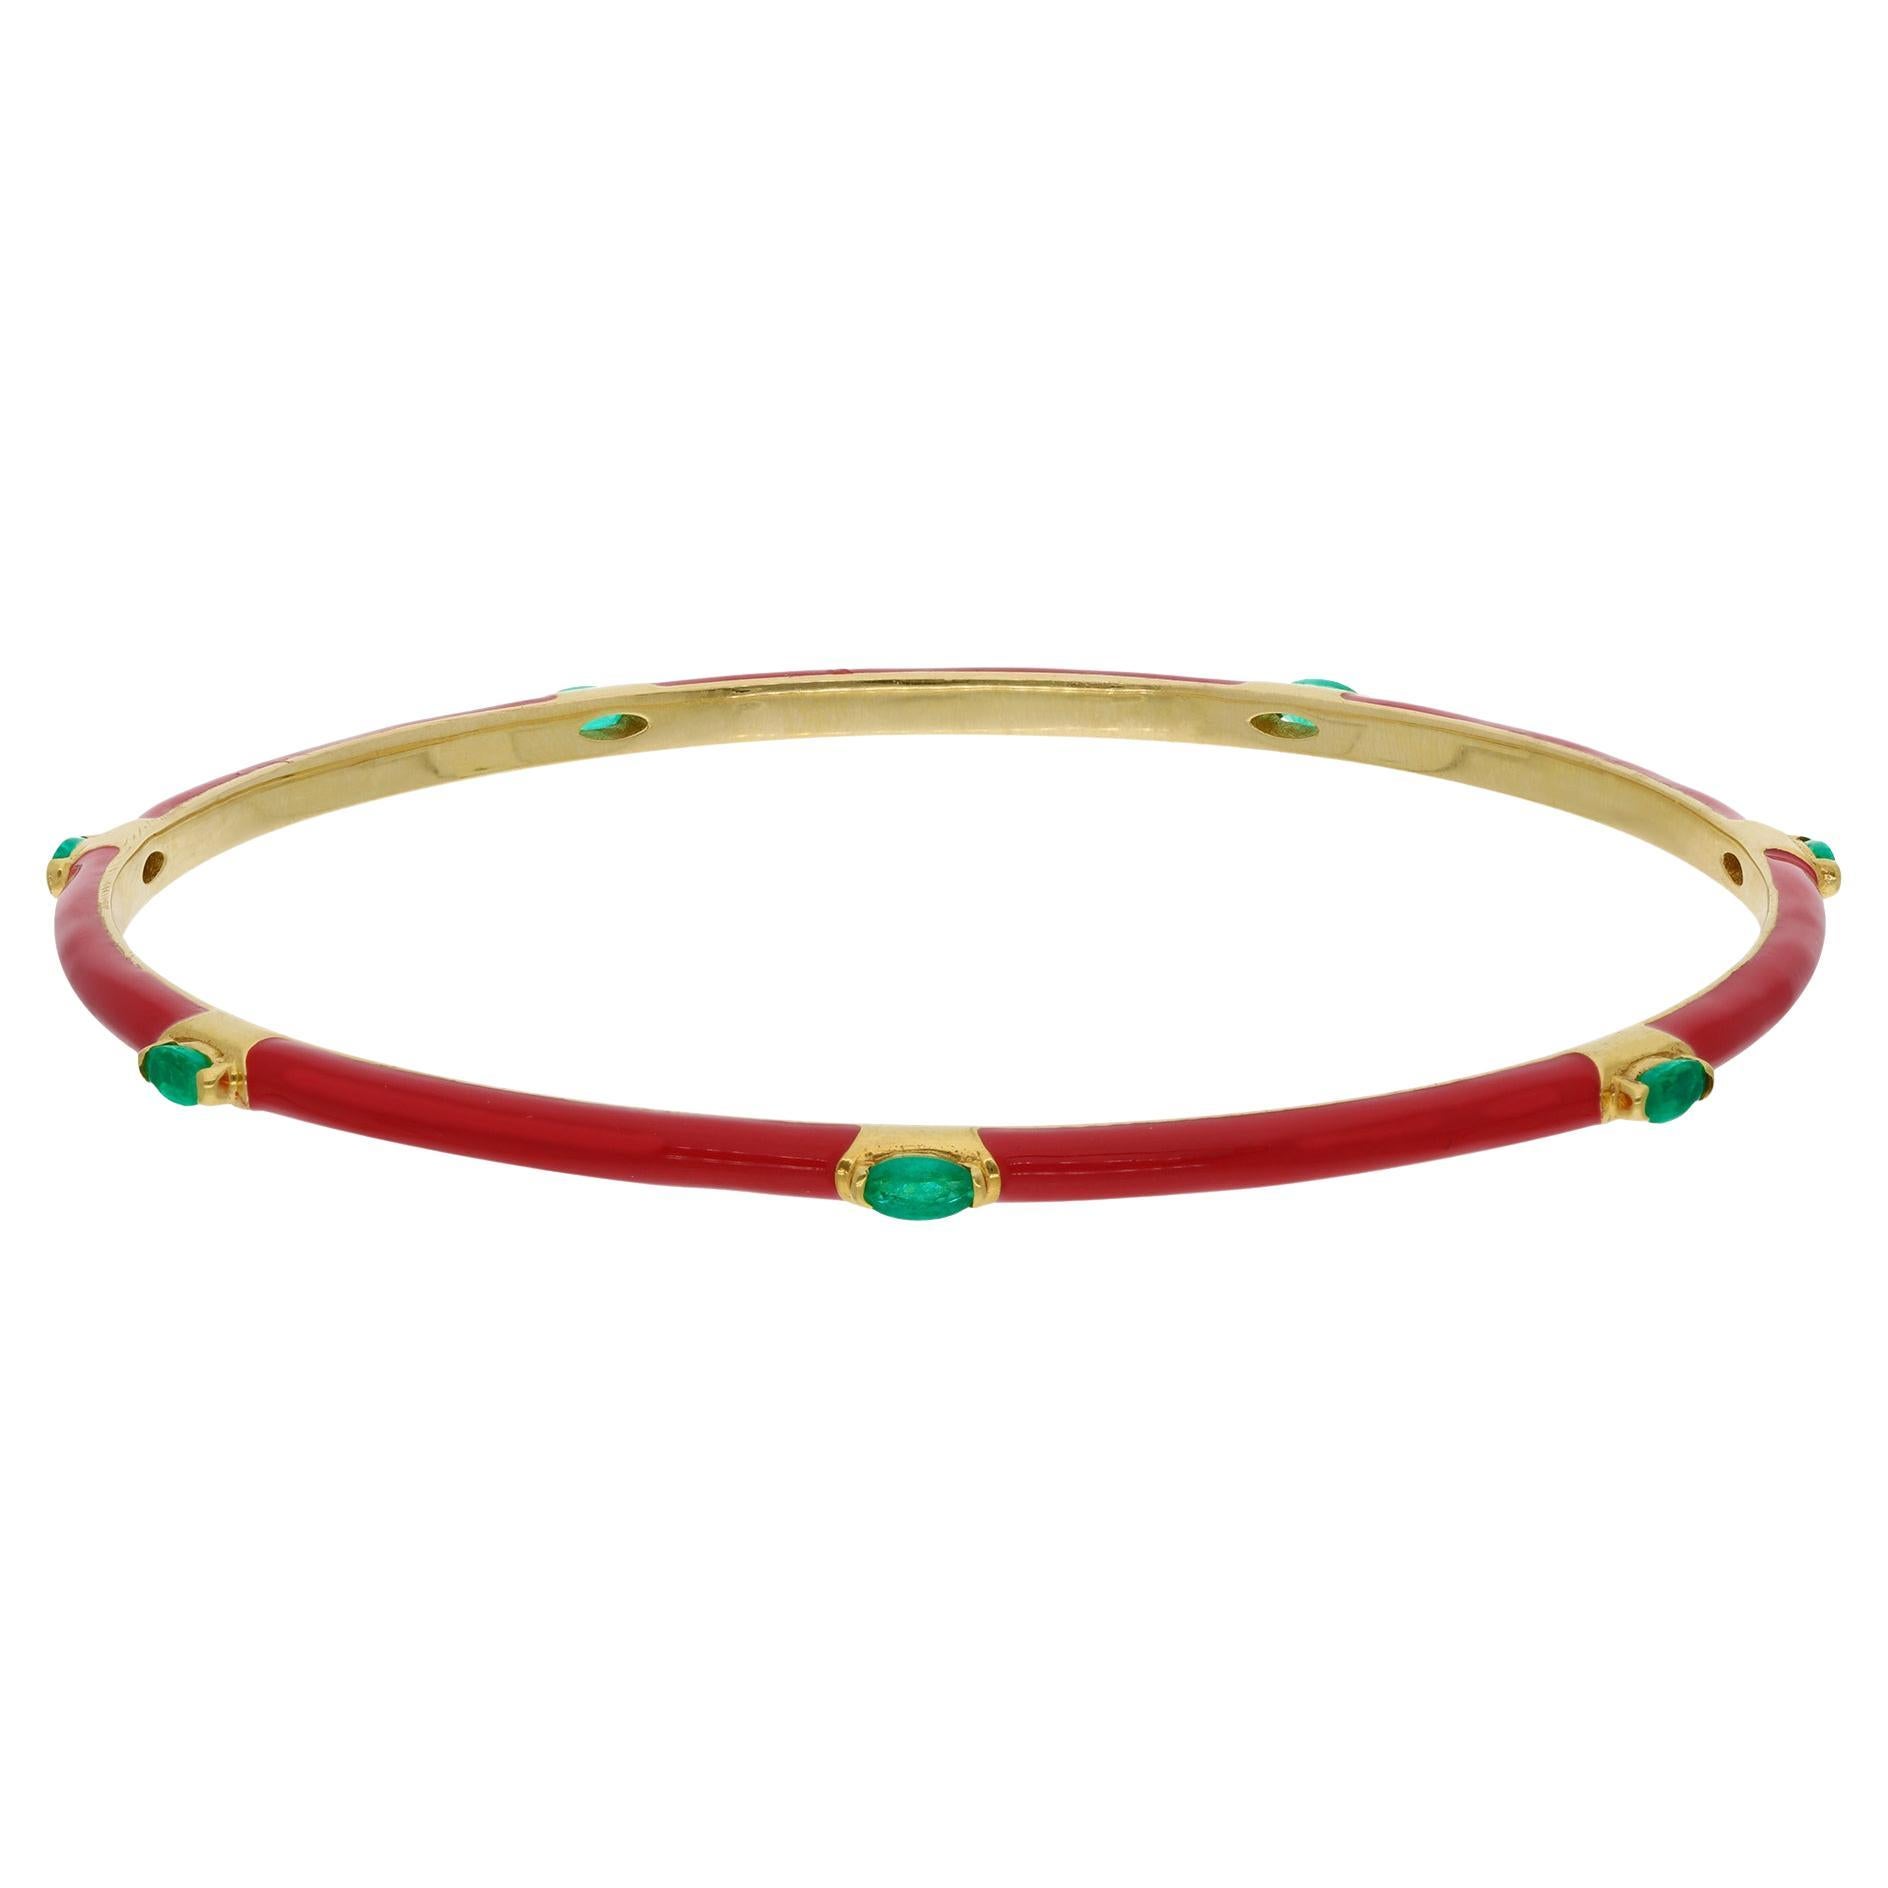 Real Oval Emerald Gemstone Sleek Bangle Bracelet 14 Karat Yellow Gold Jewelry